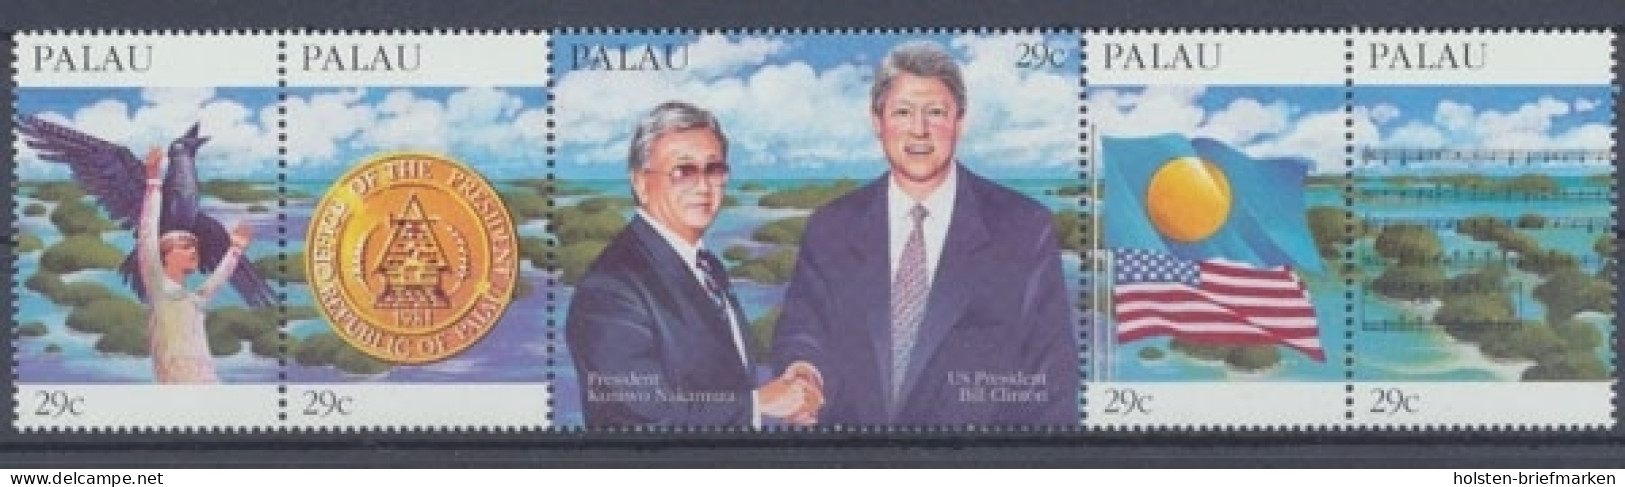 Palau, MiNr. 770-774 Zd, Clinton, Postfrisch - Palau